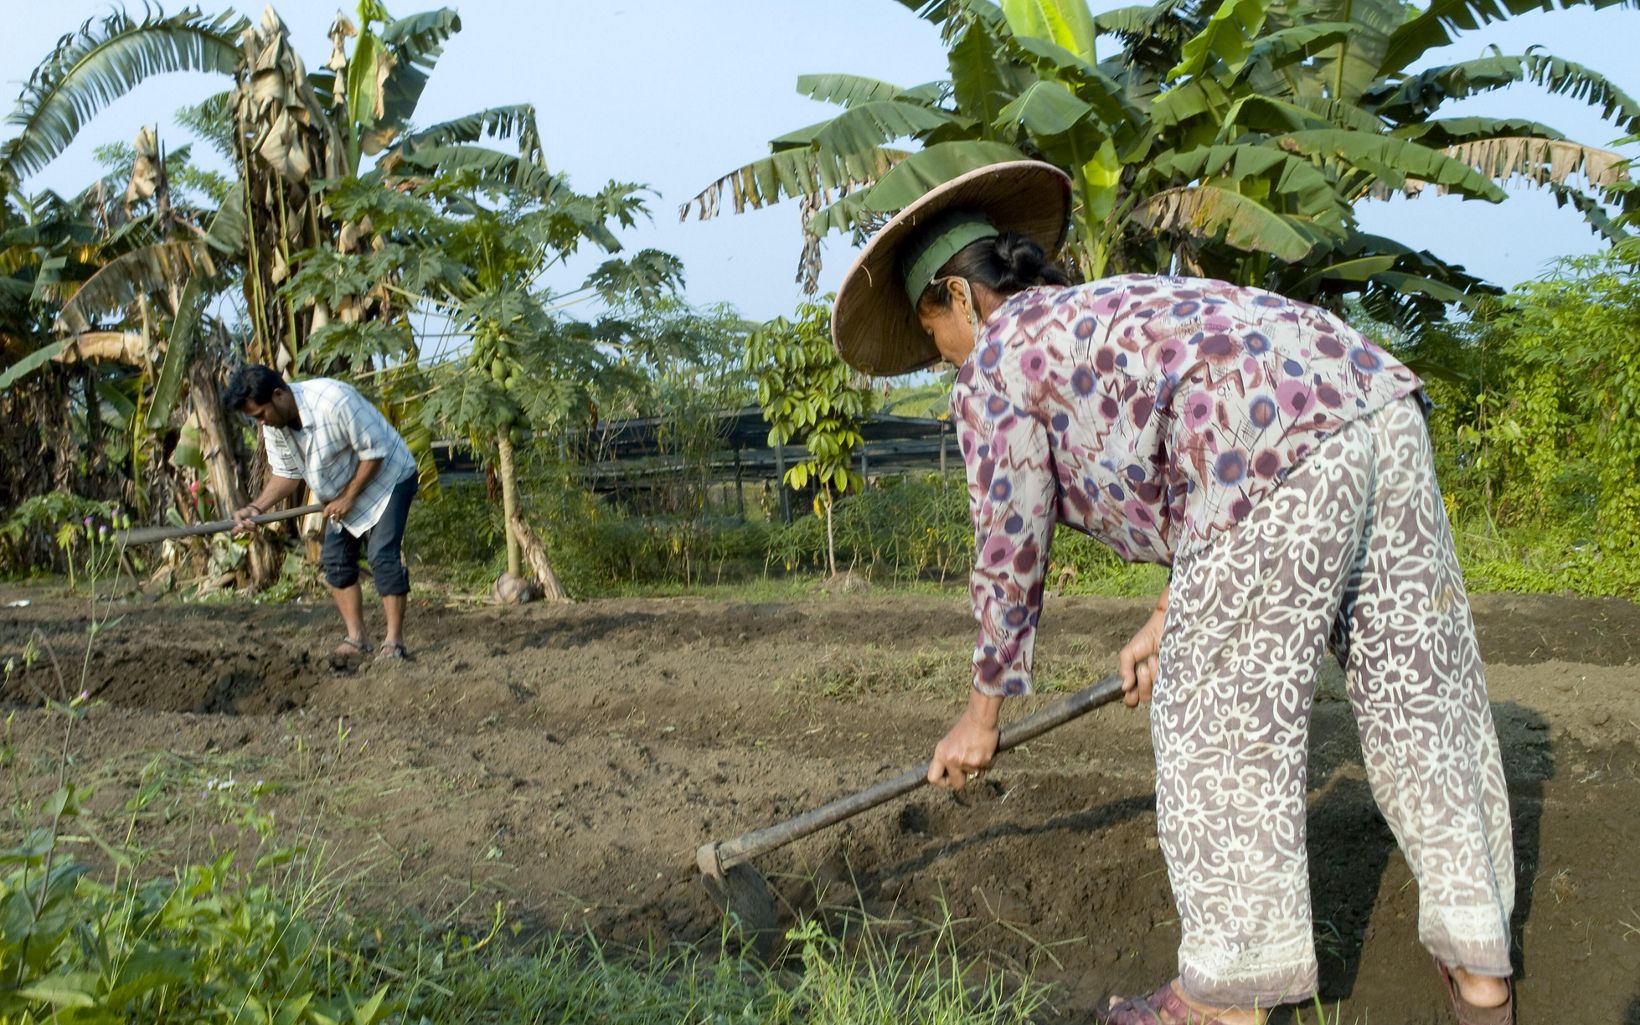 Field Farmers prepare field for planting at the Nehas Liah Bing Village, Kalimantan region of Borneo, Indonesia. © Bridget Besaw 